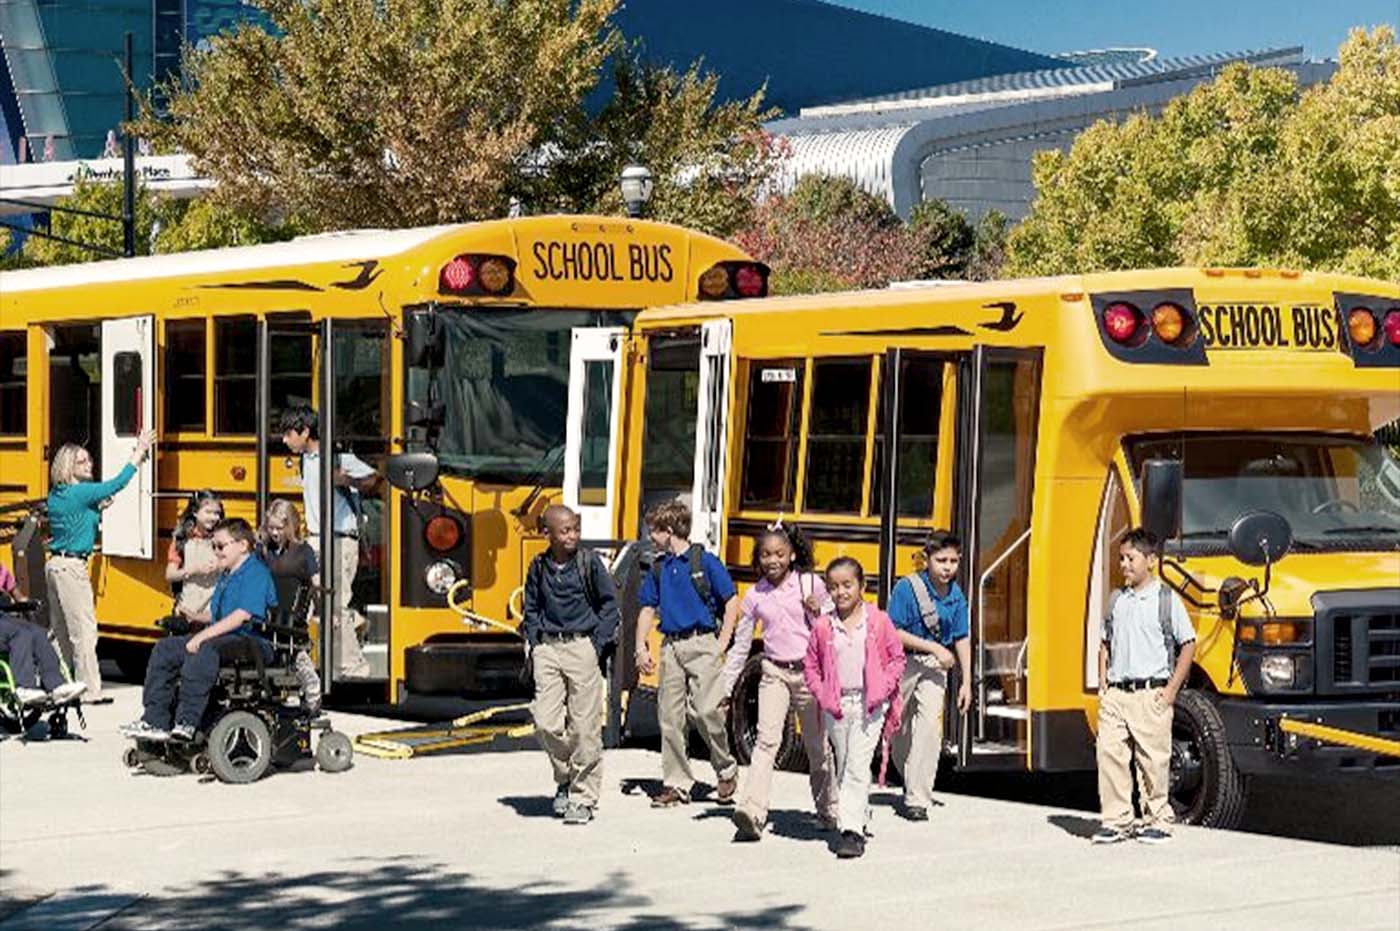 Children getting off of school busses.